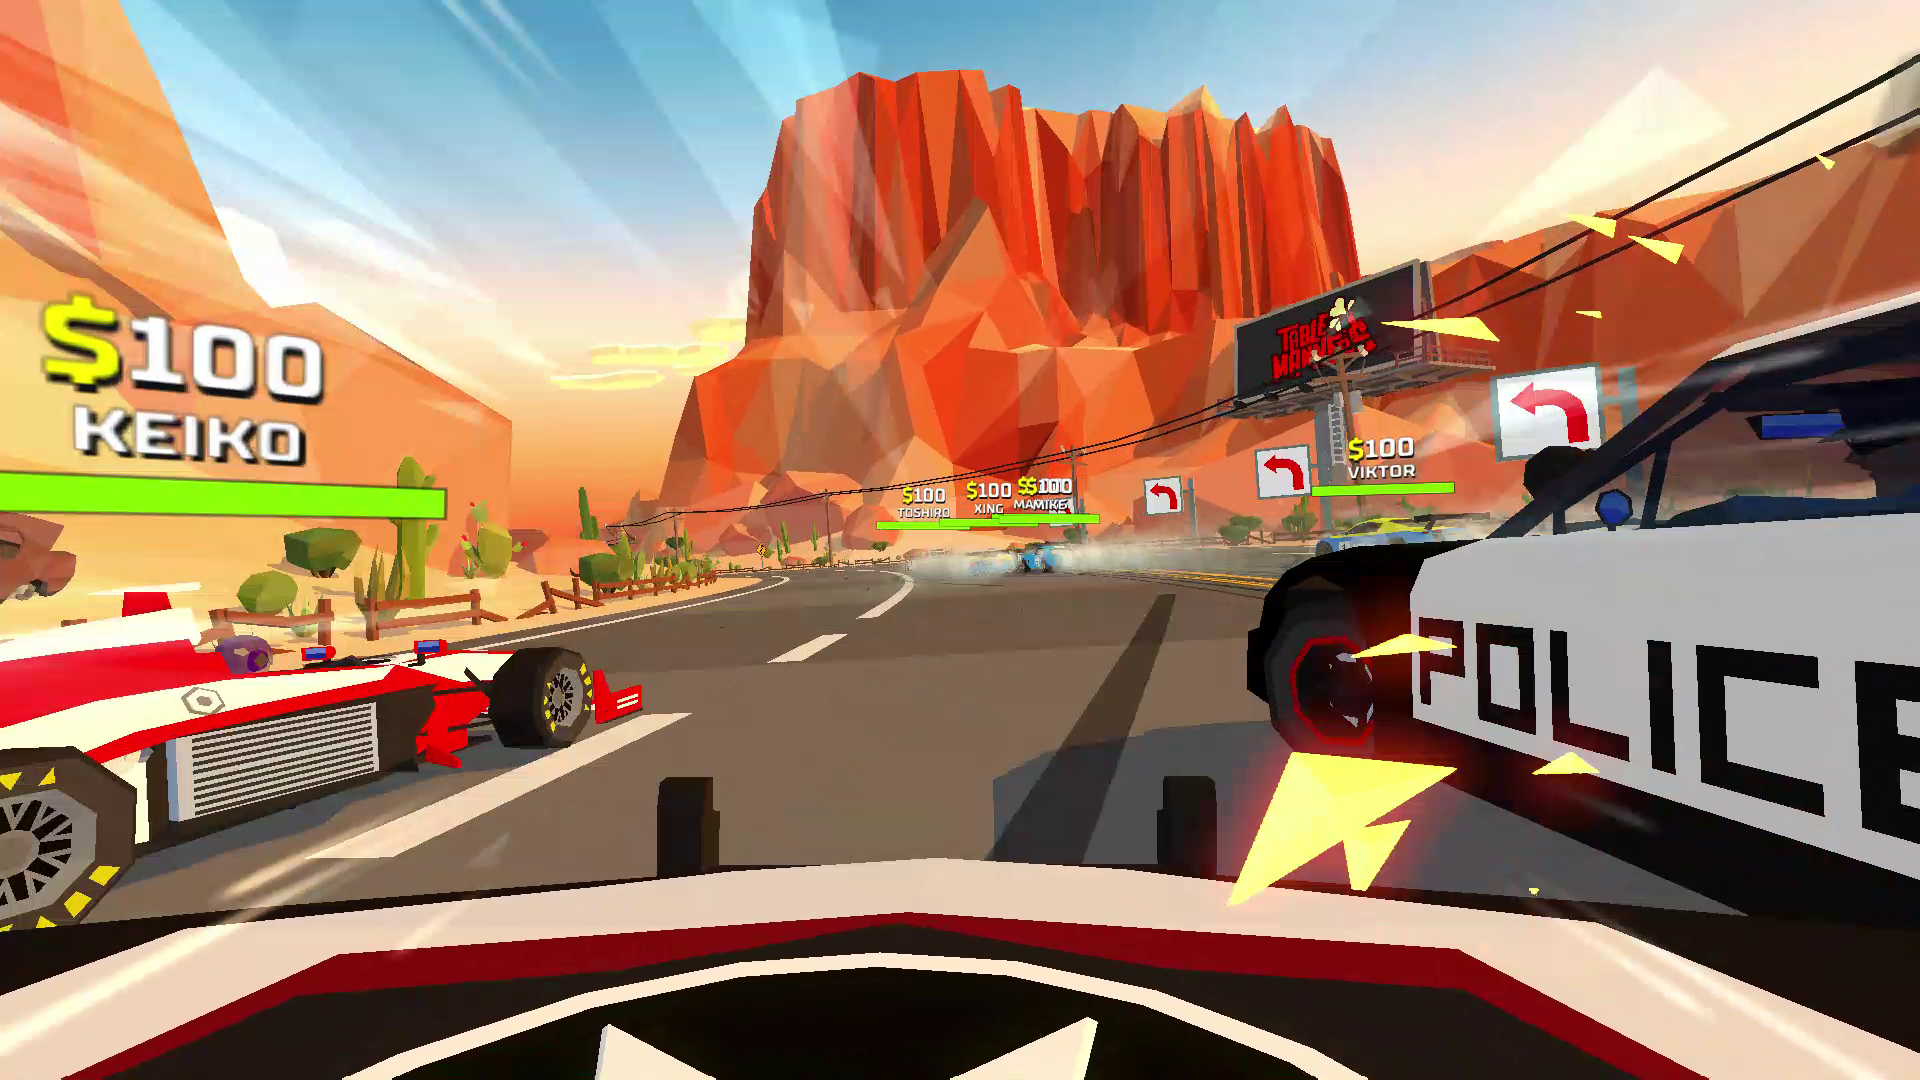 Playtest Hotshot Racing on Xbox One June 26 – June 29!